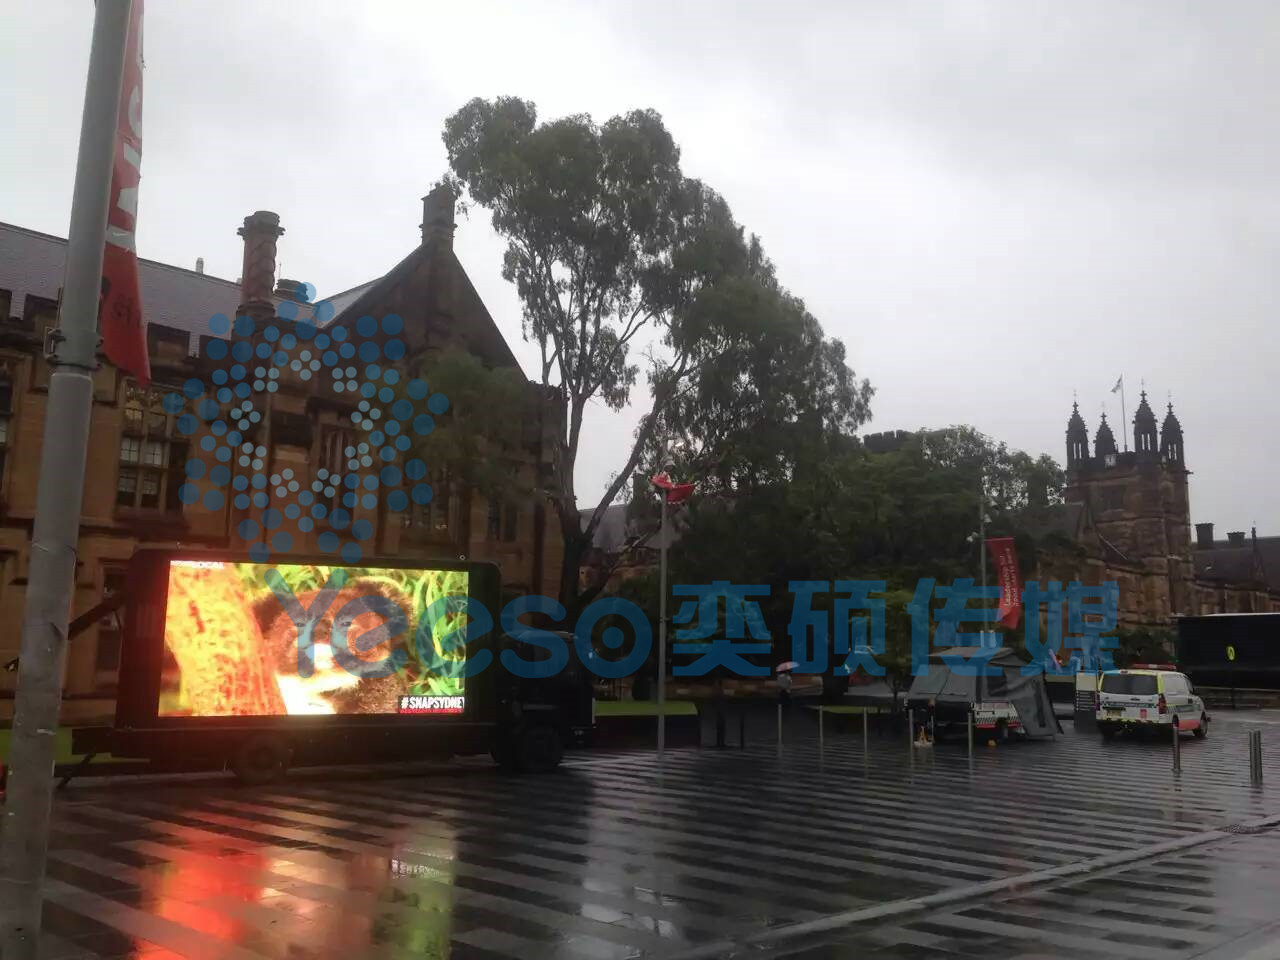 LED Screen Truck in Sydney university